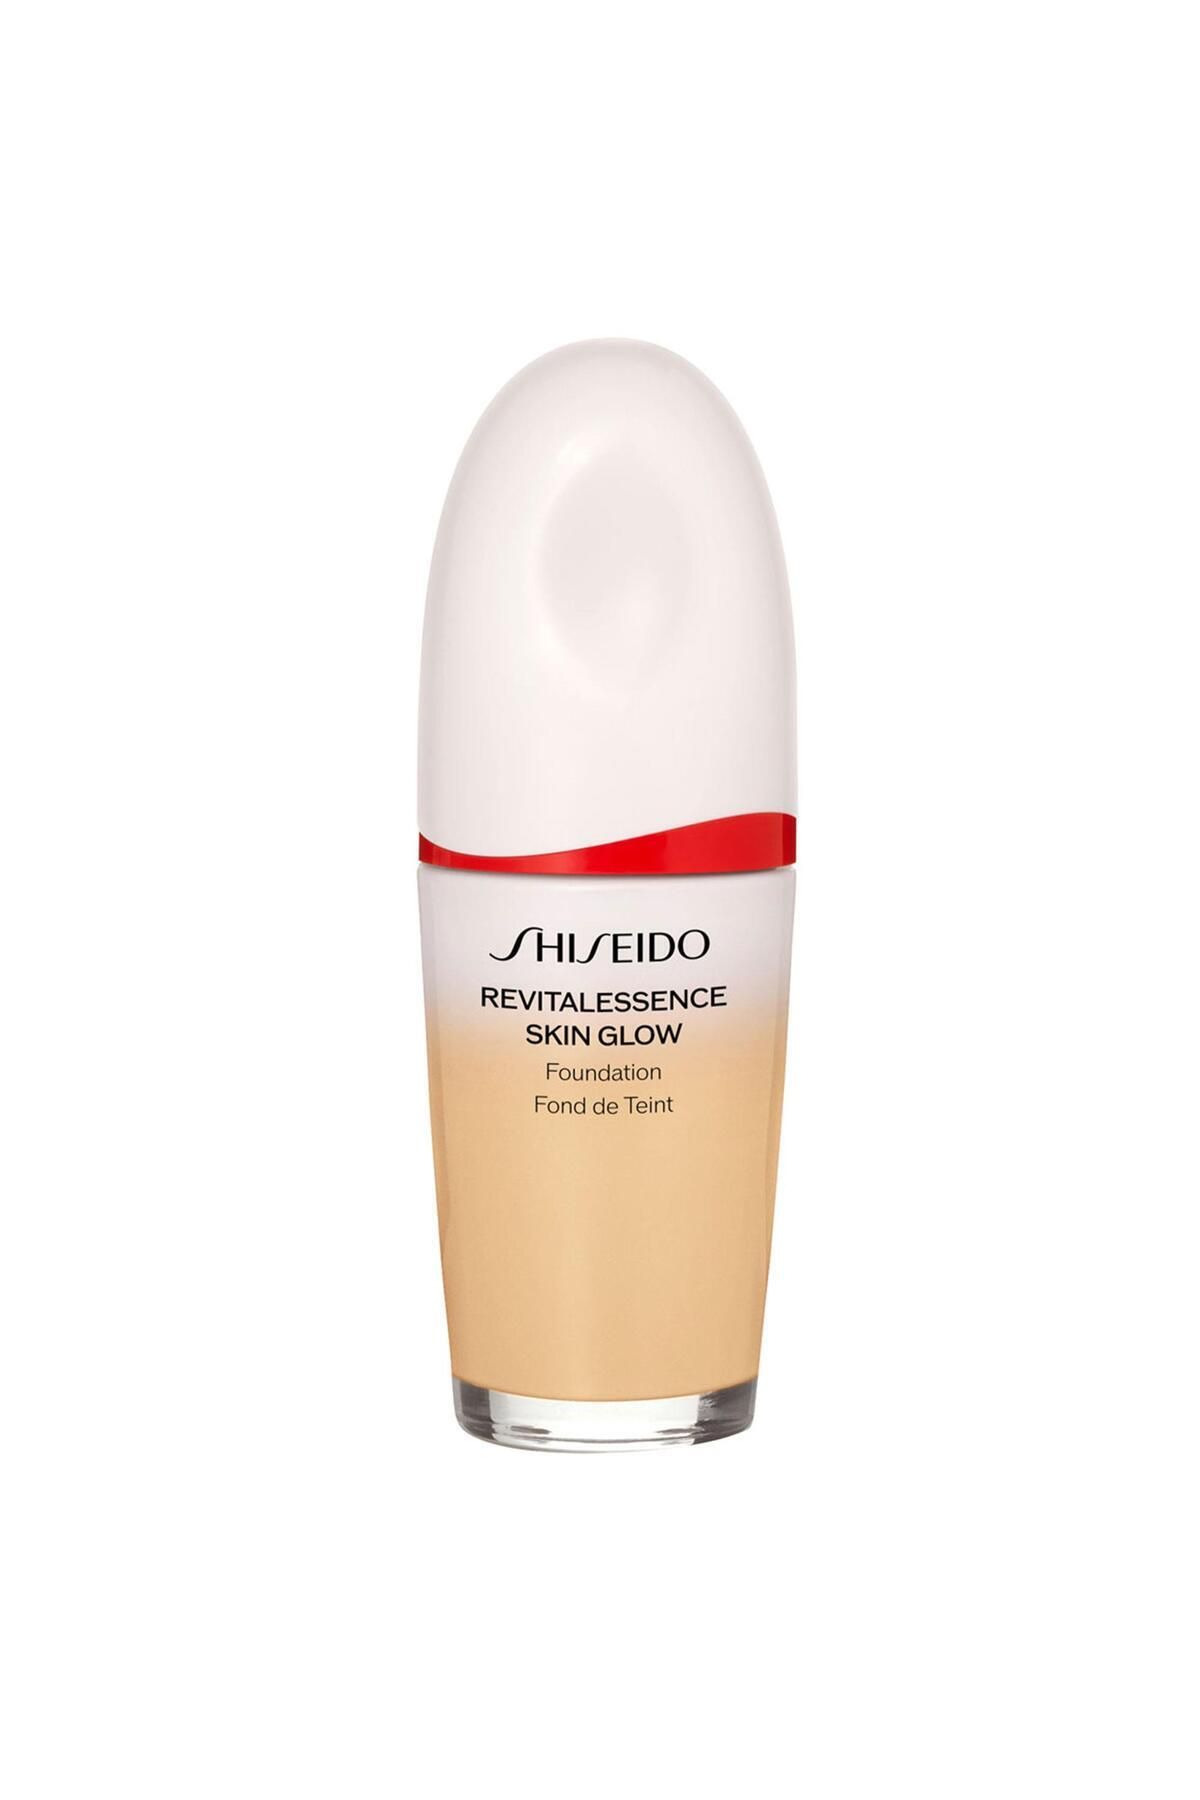 Shiseido Revıtalessence Skın Glow Foundatıon Spf 30 Pa 210